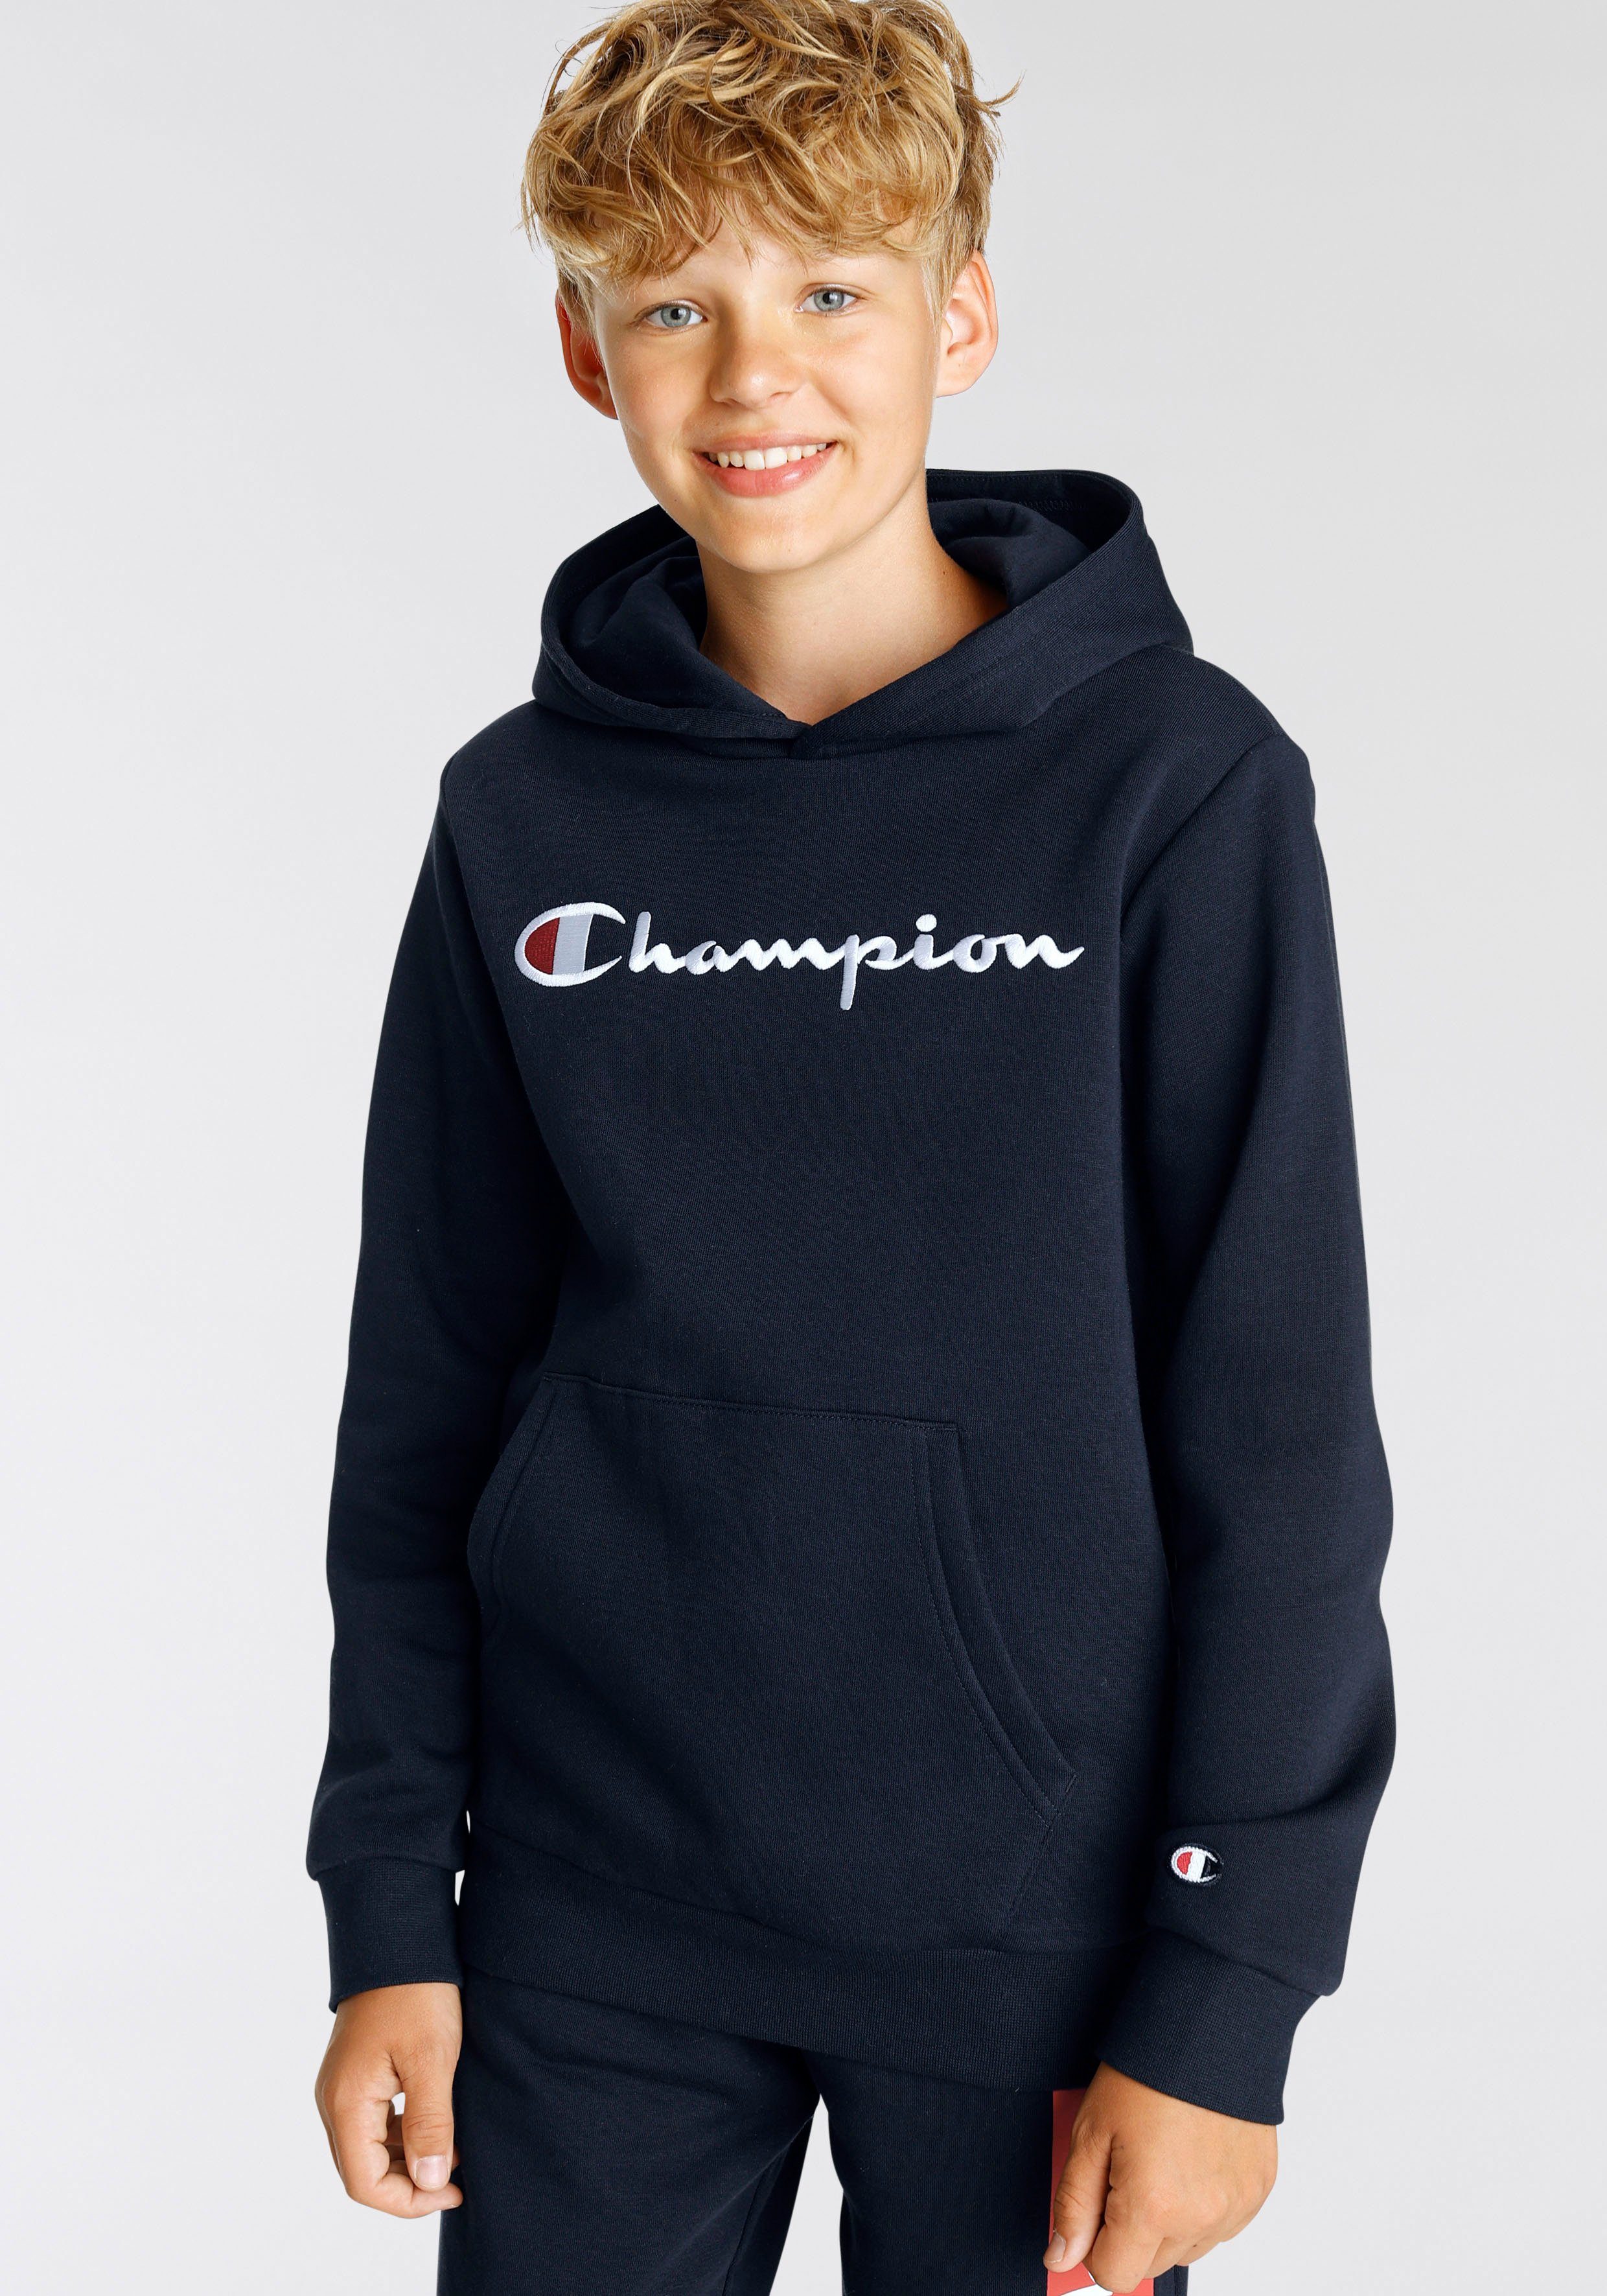 Champion Sweatshirt Classic Hooded Sweatshirt large Logo - für Kinder marine | Sweatshirts